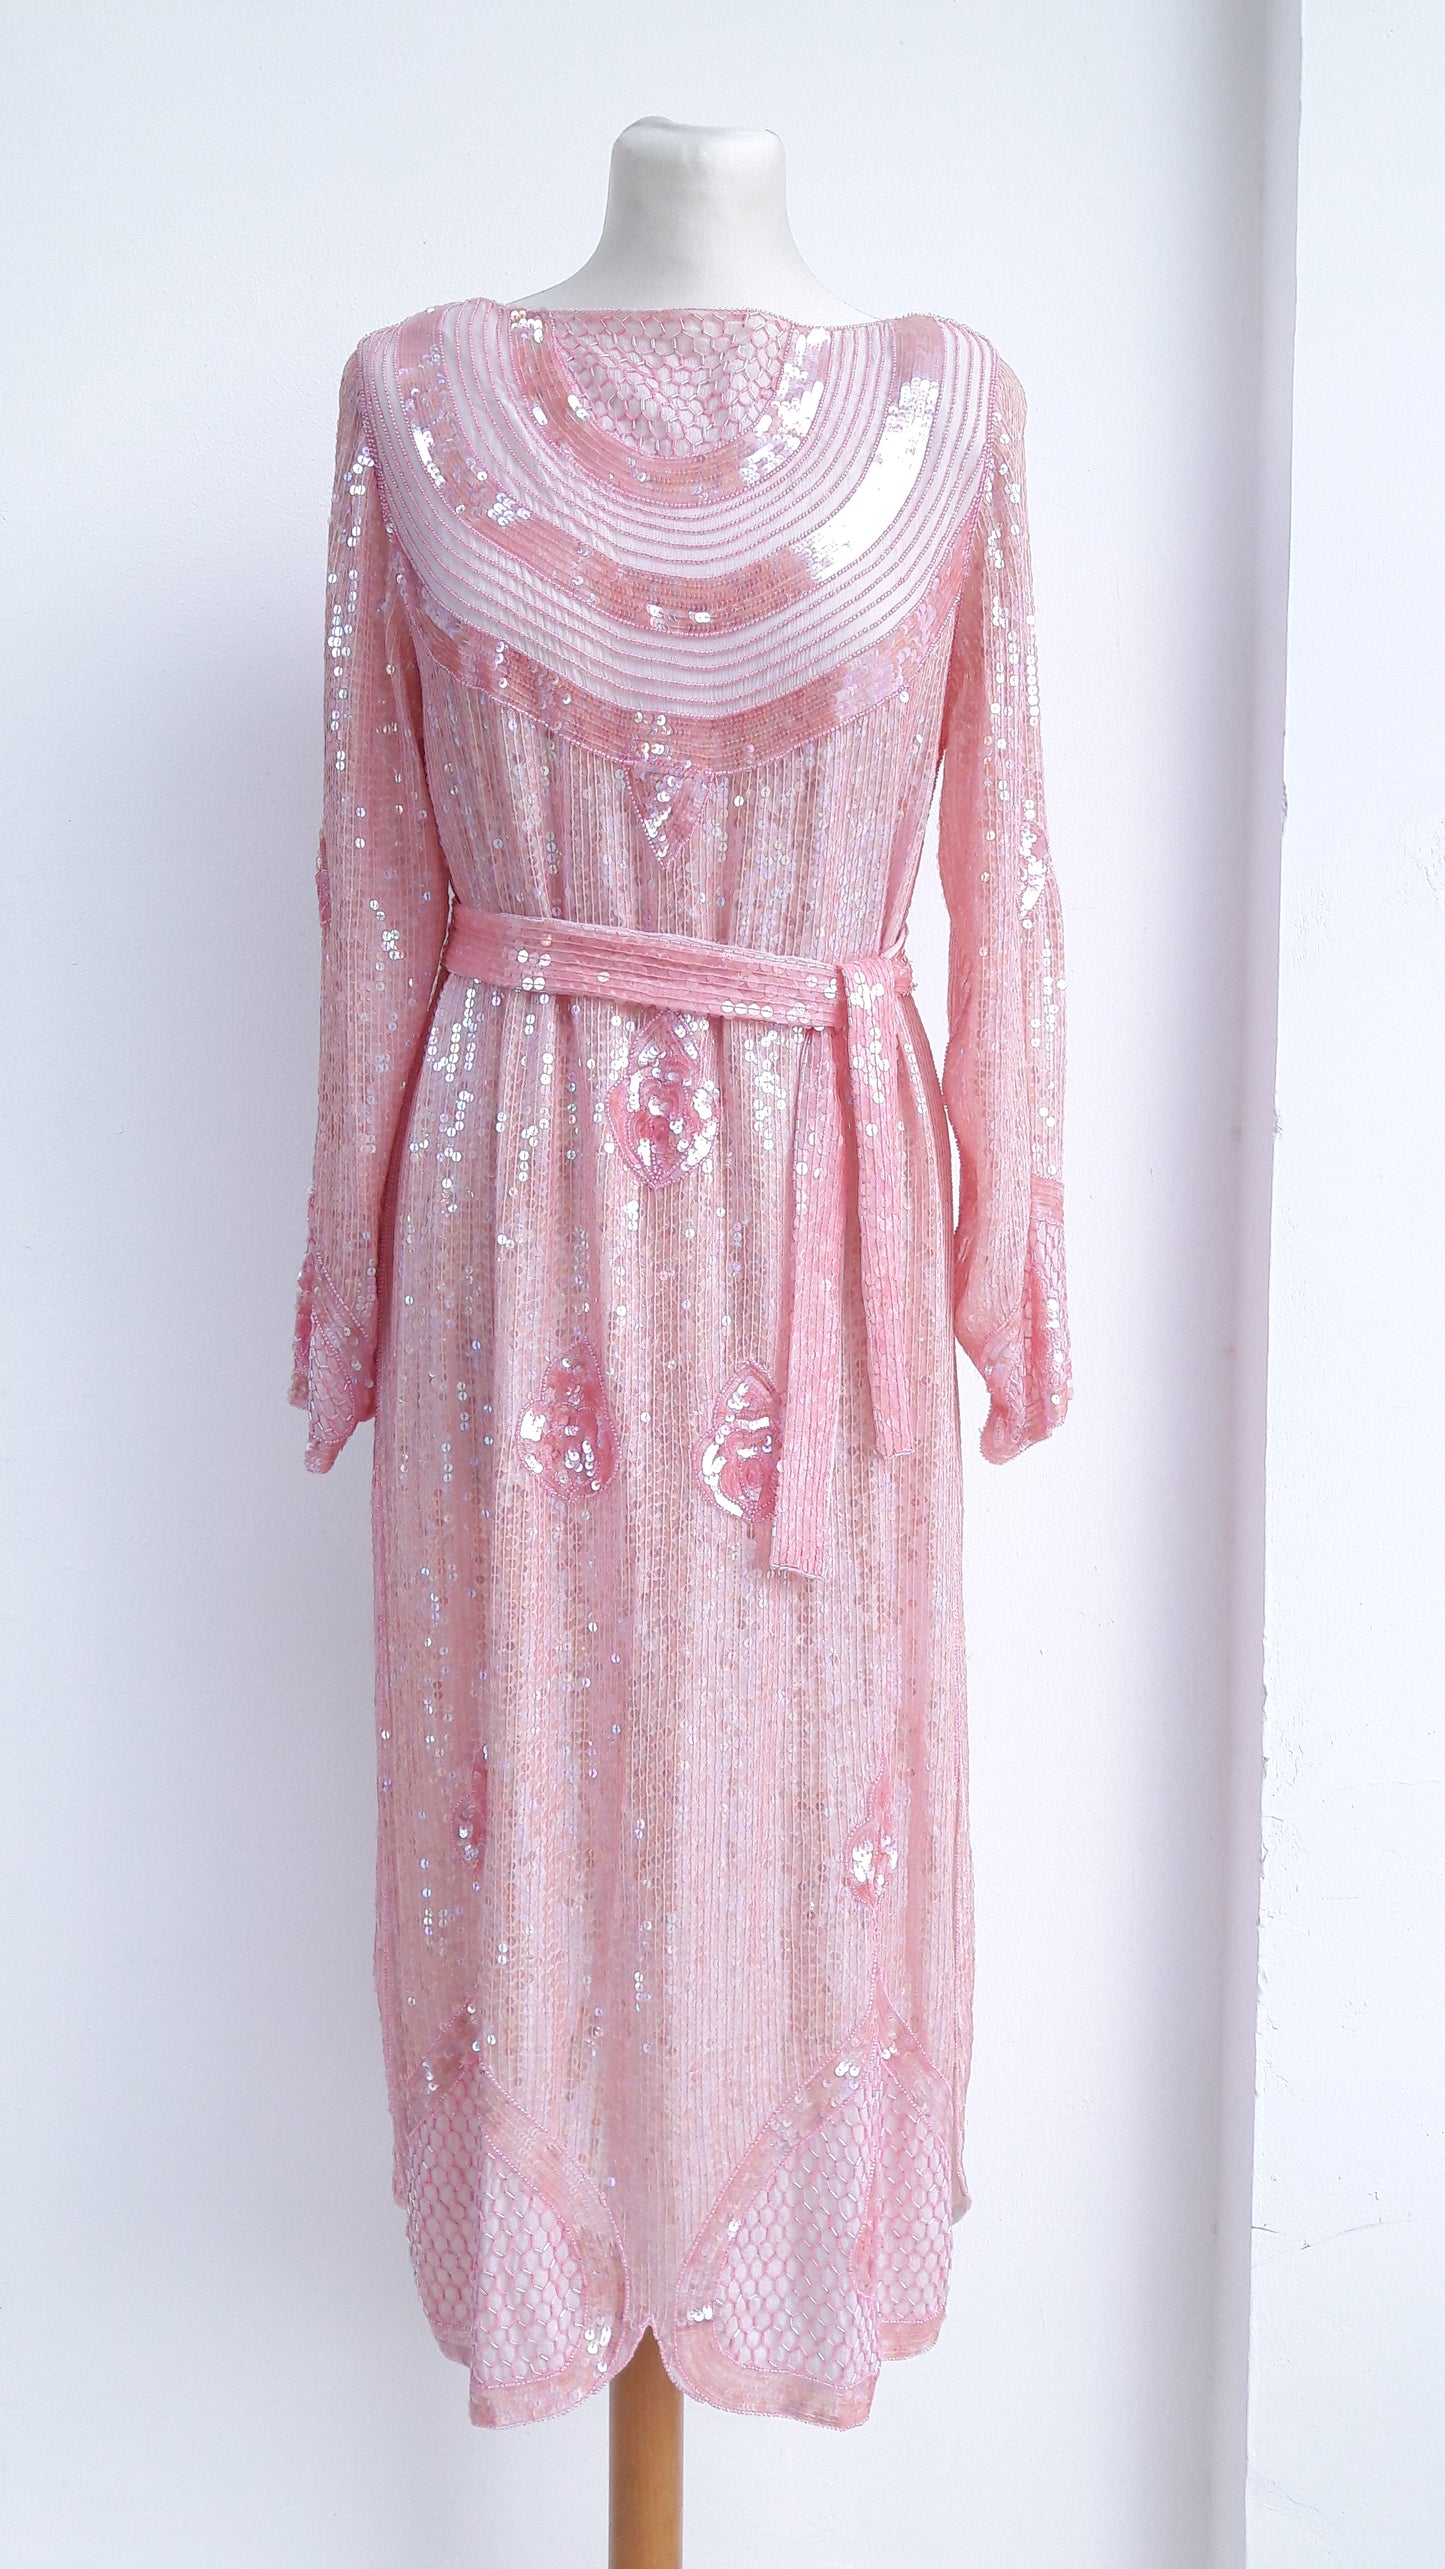 Stunning Vintage Beaded Art Deco Dress